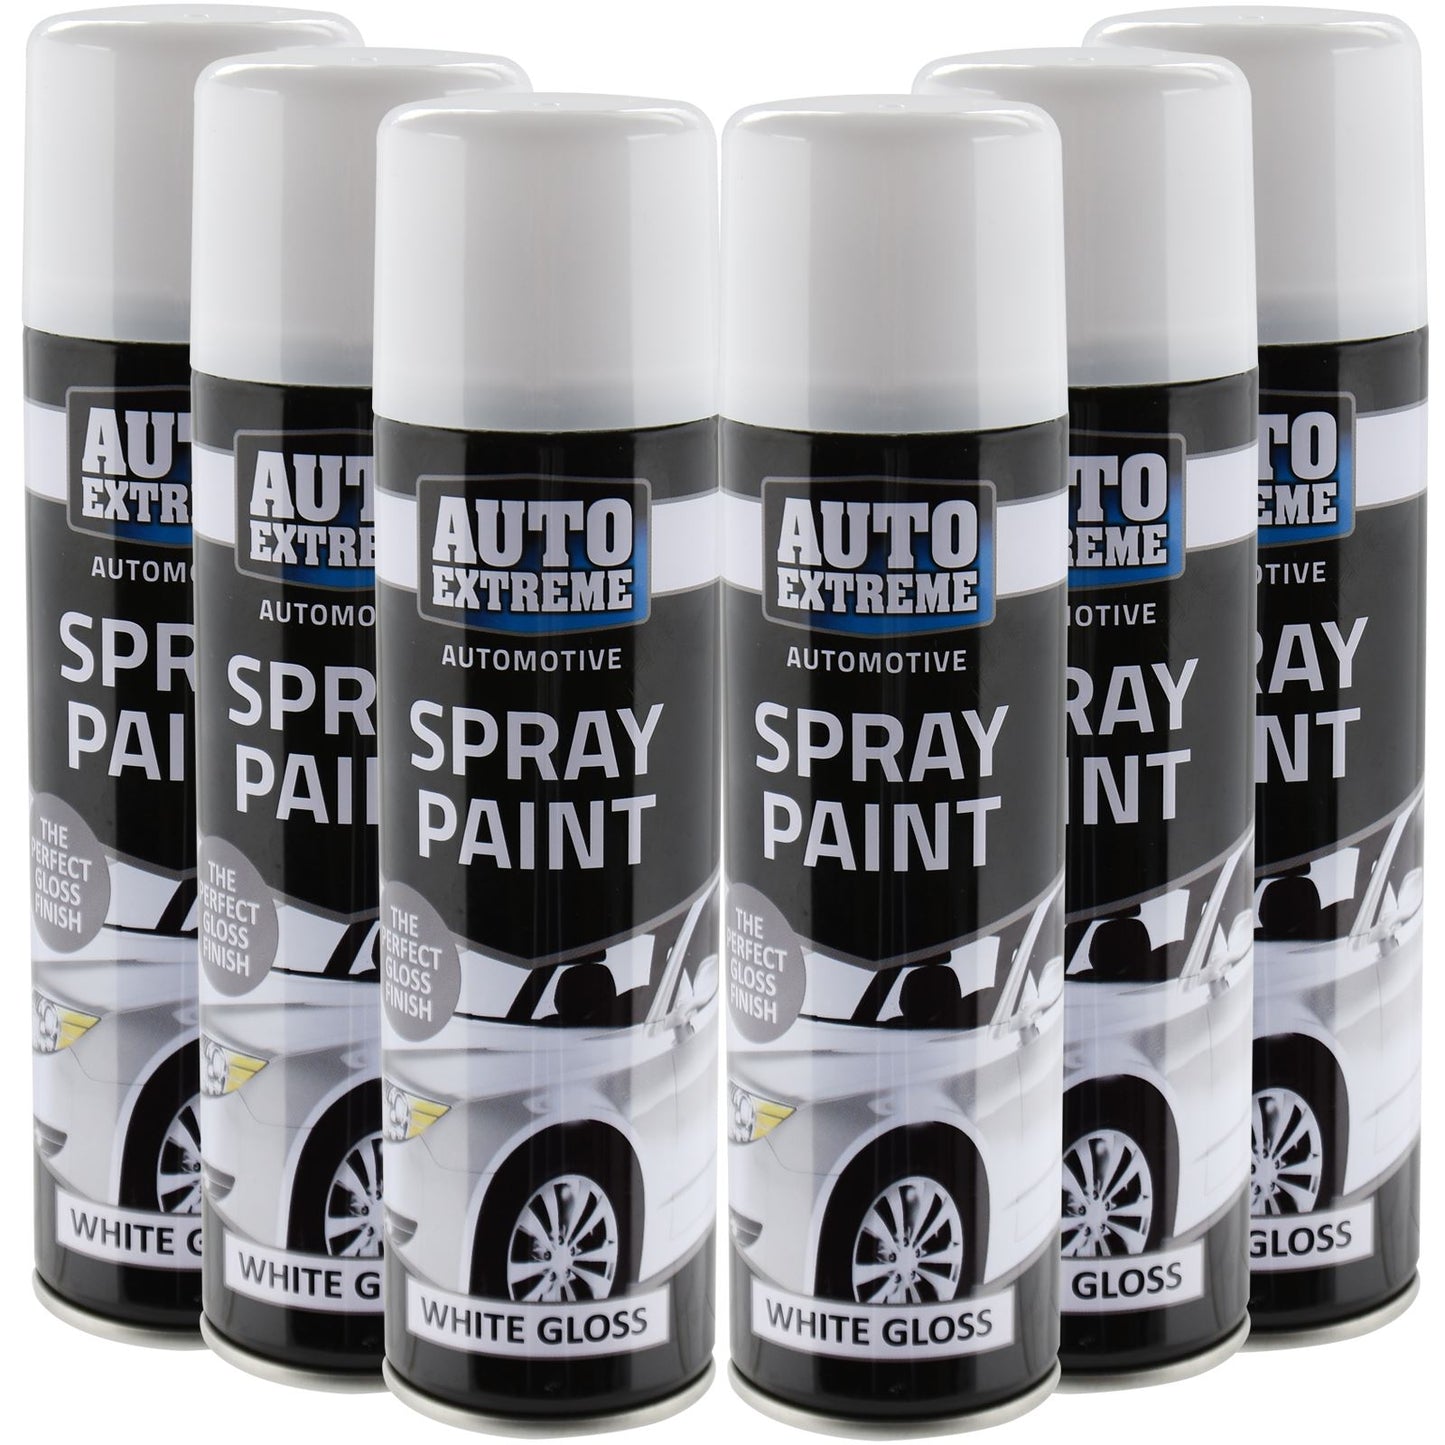 White Gloss Automotive Spray Paint